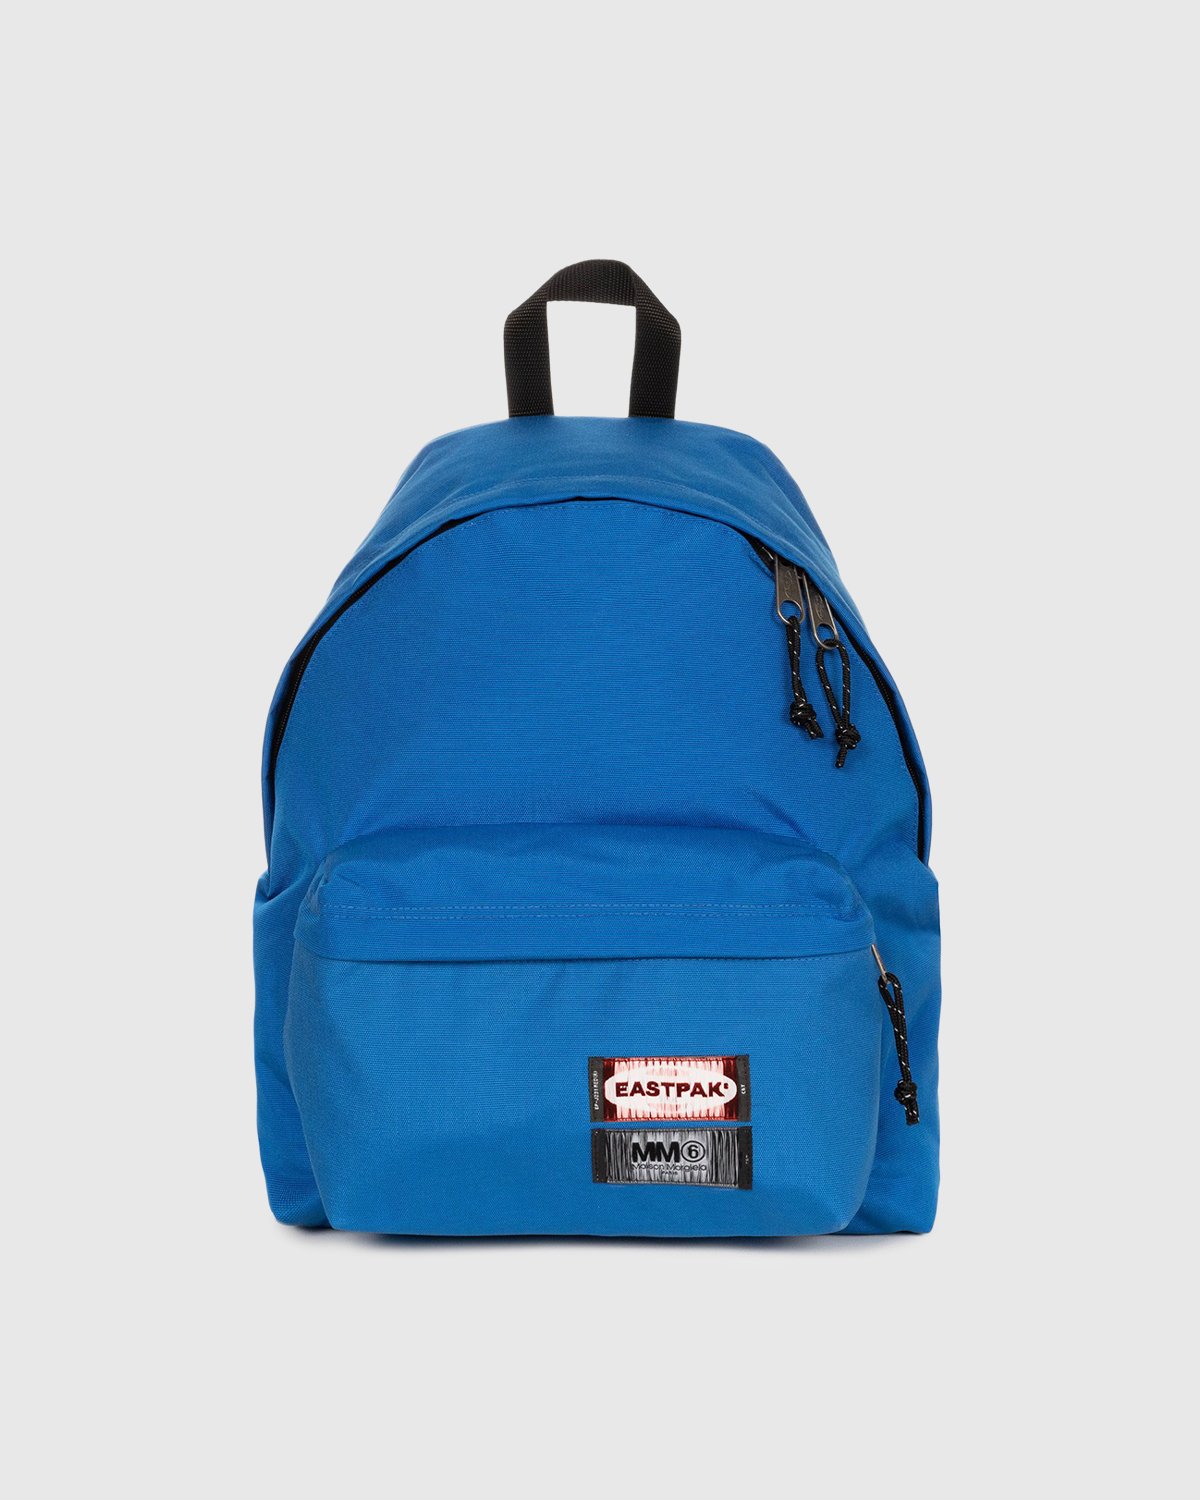 MM6 Maison Margiela x Eastpak - Padded Backpack Dazzling Blue - Accessories - Blue - Image 1